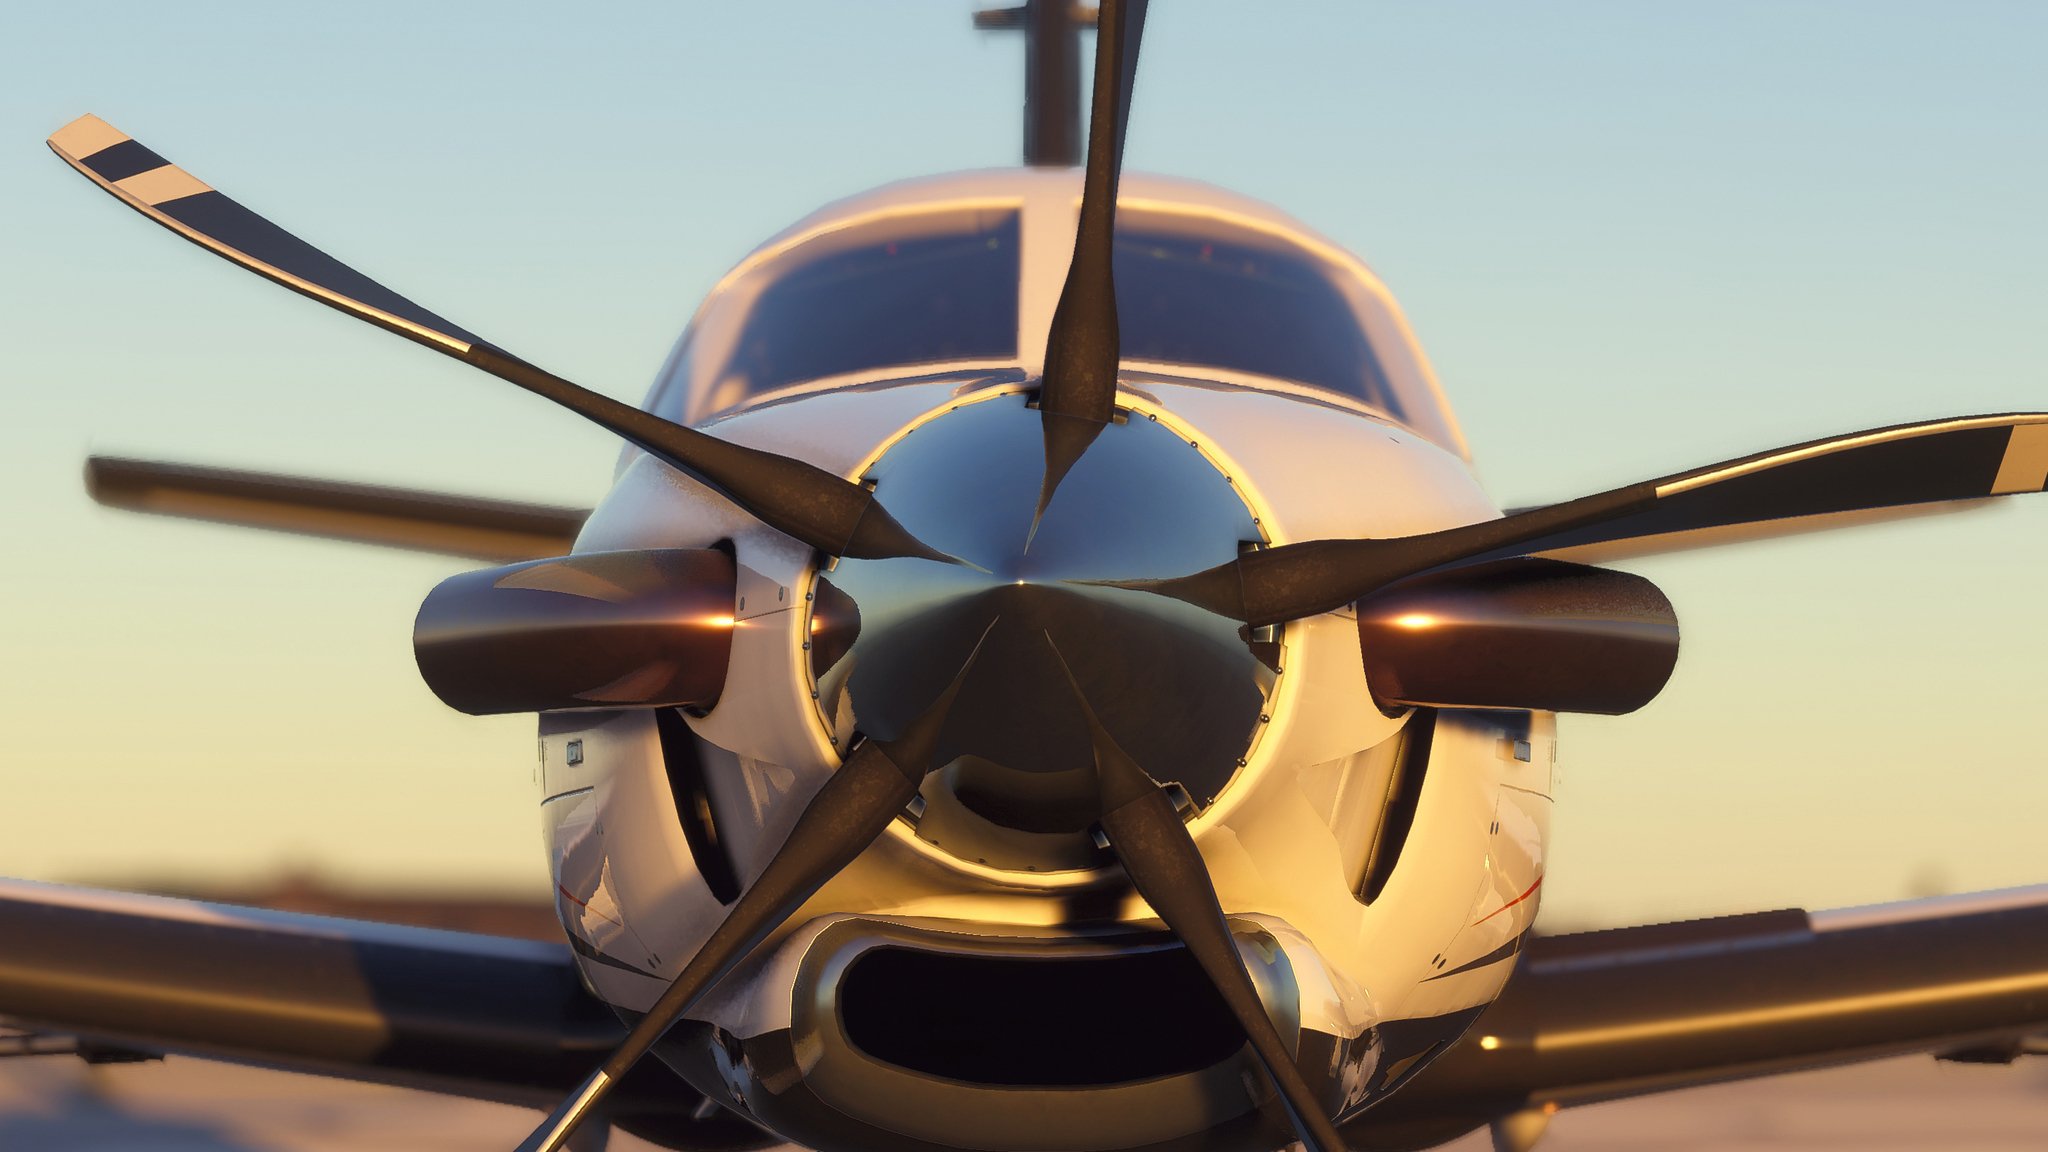 Microsoft Flight Simulator 2020: Everything We Know